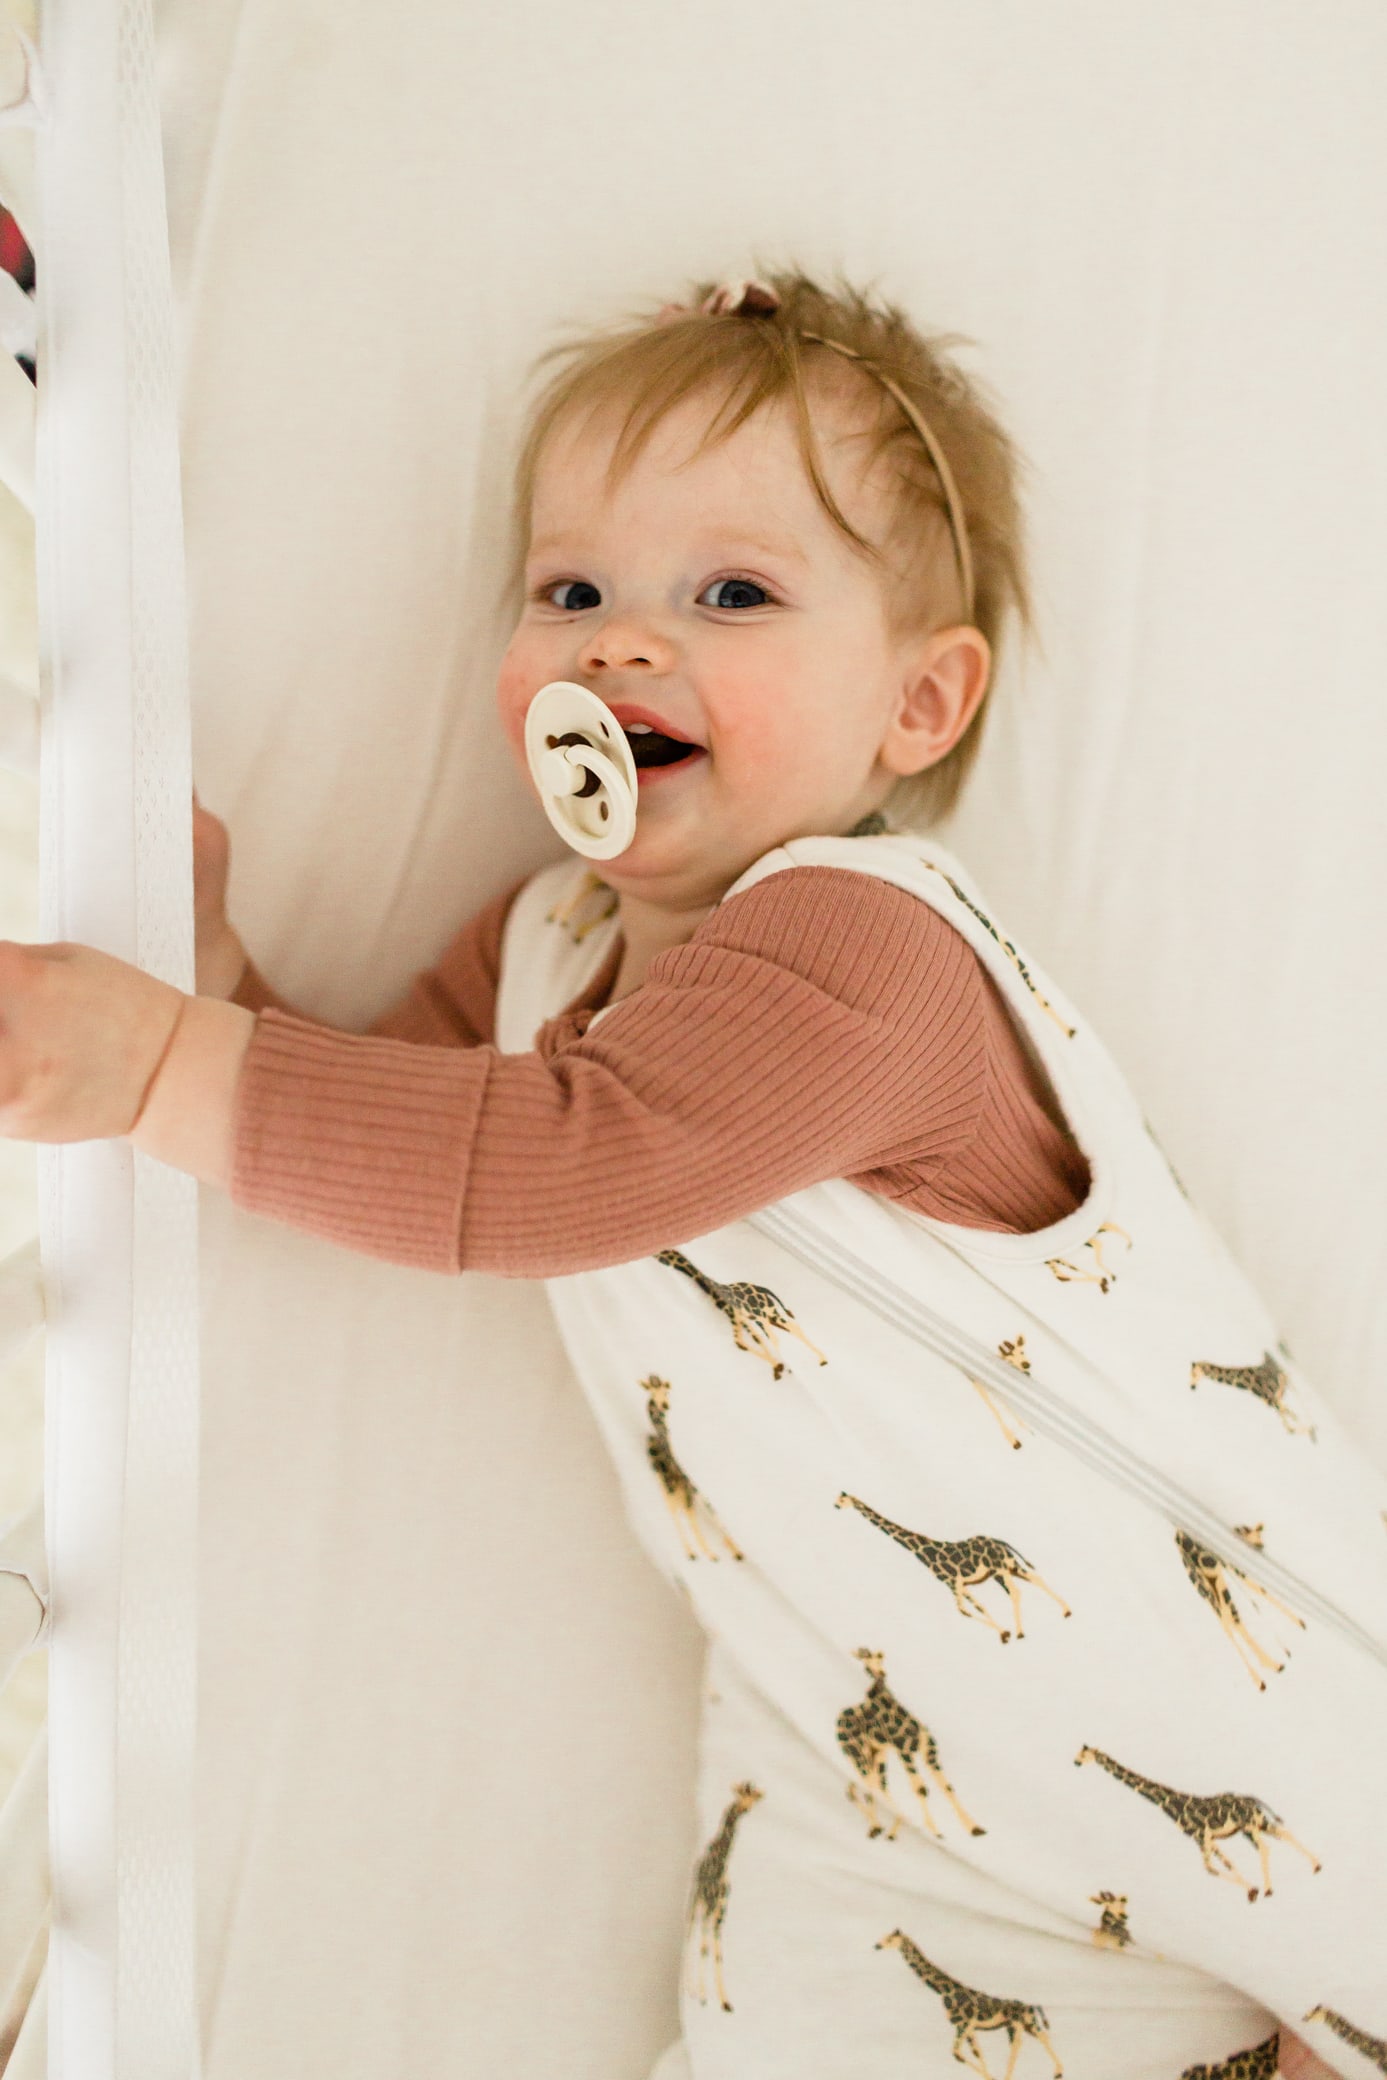 Kyte BABY Sleep Bags: A Closer Look & Why We Love Them